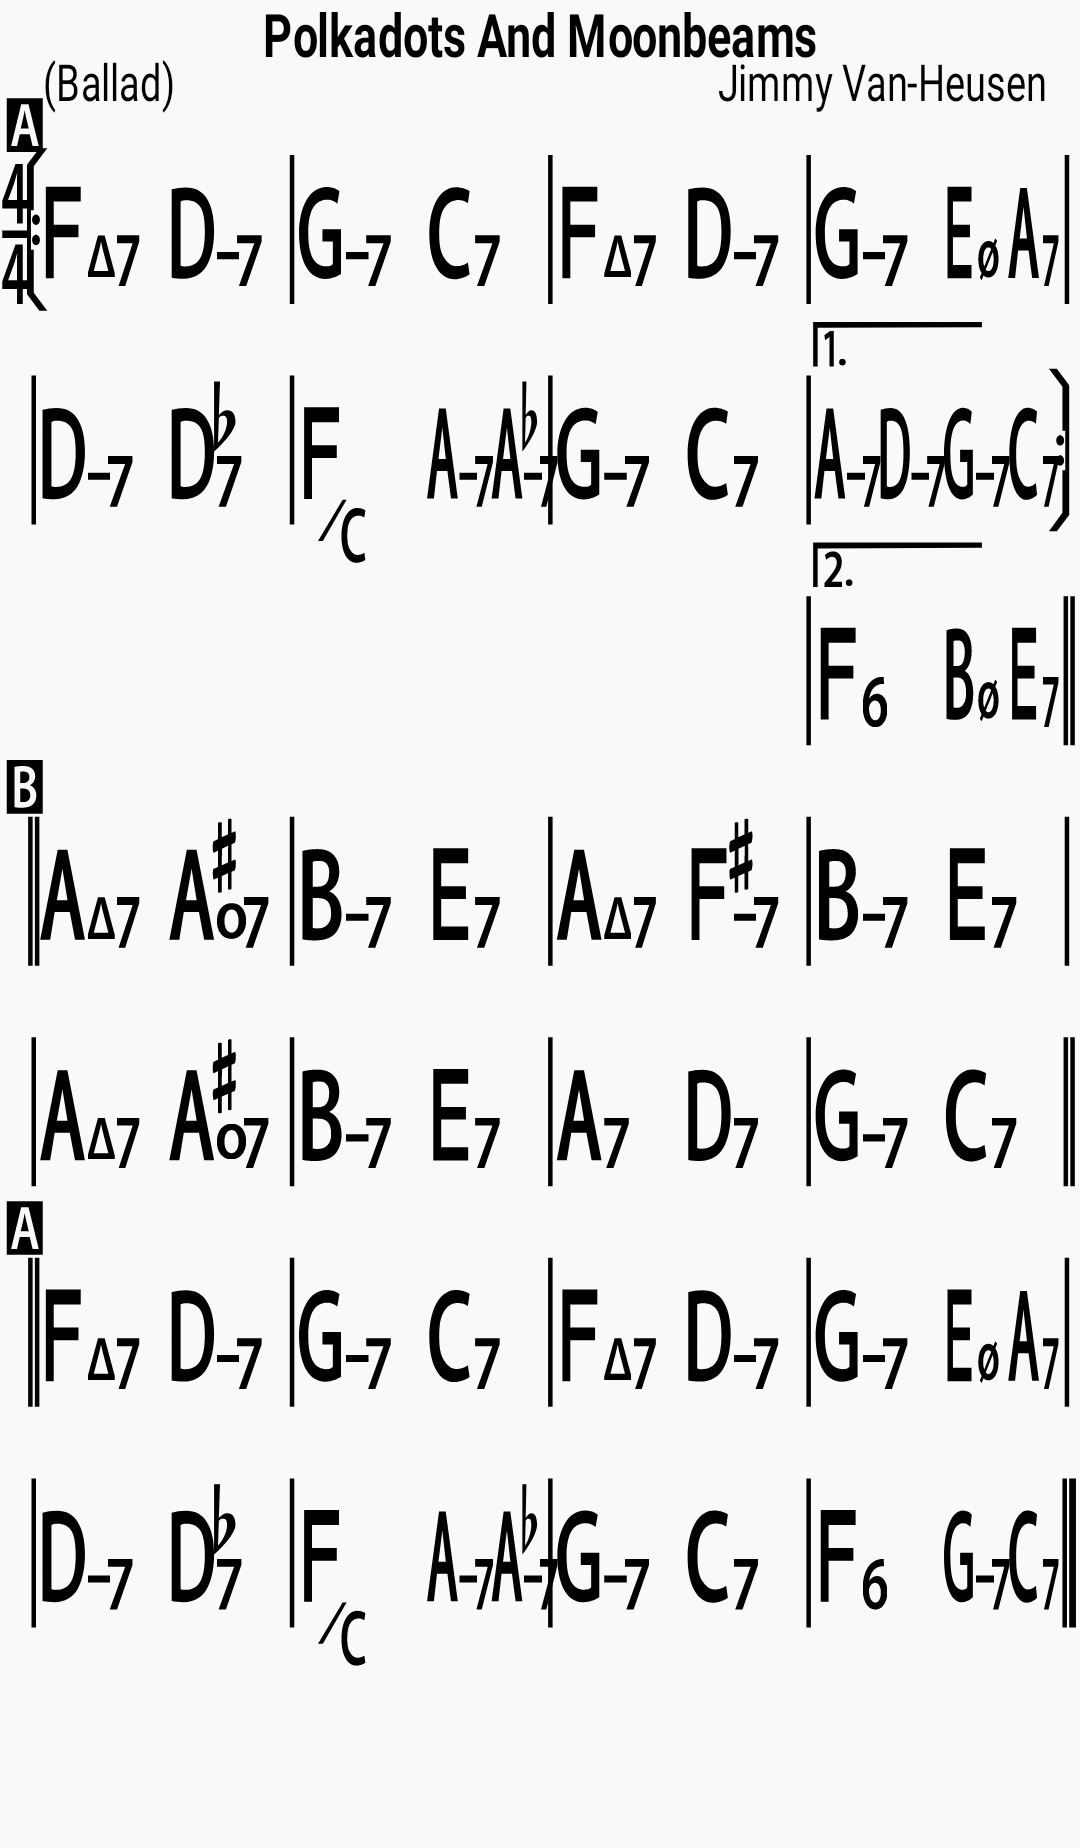 Chord chart for the jazz standard Polka Dots And Moonbeams